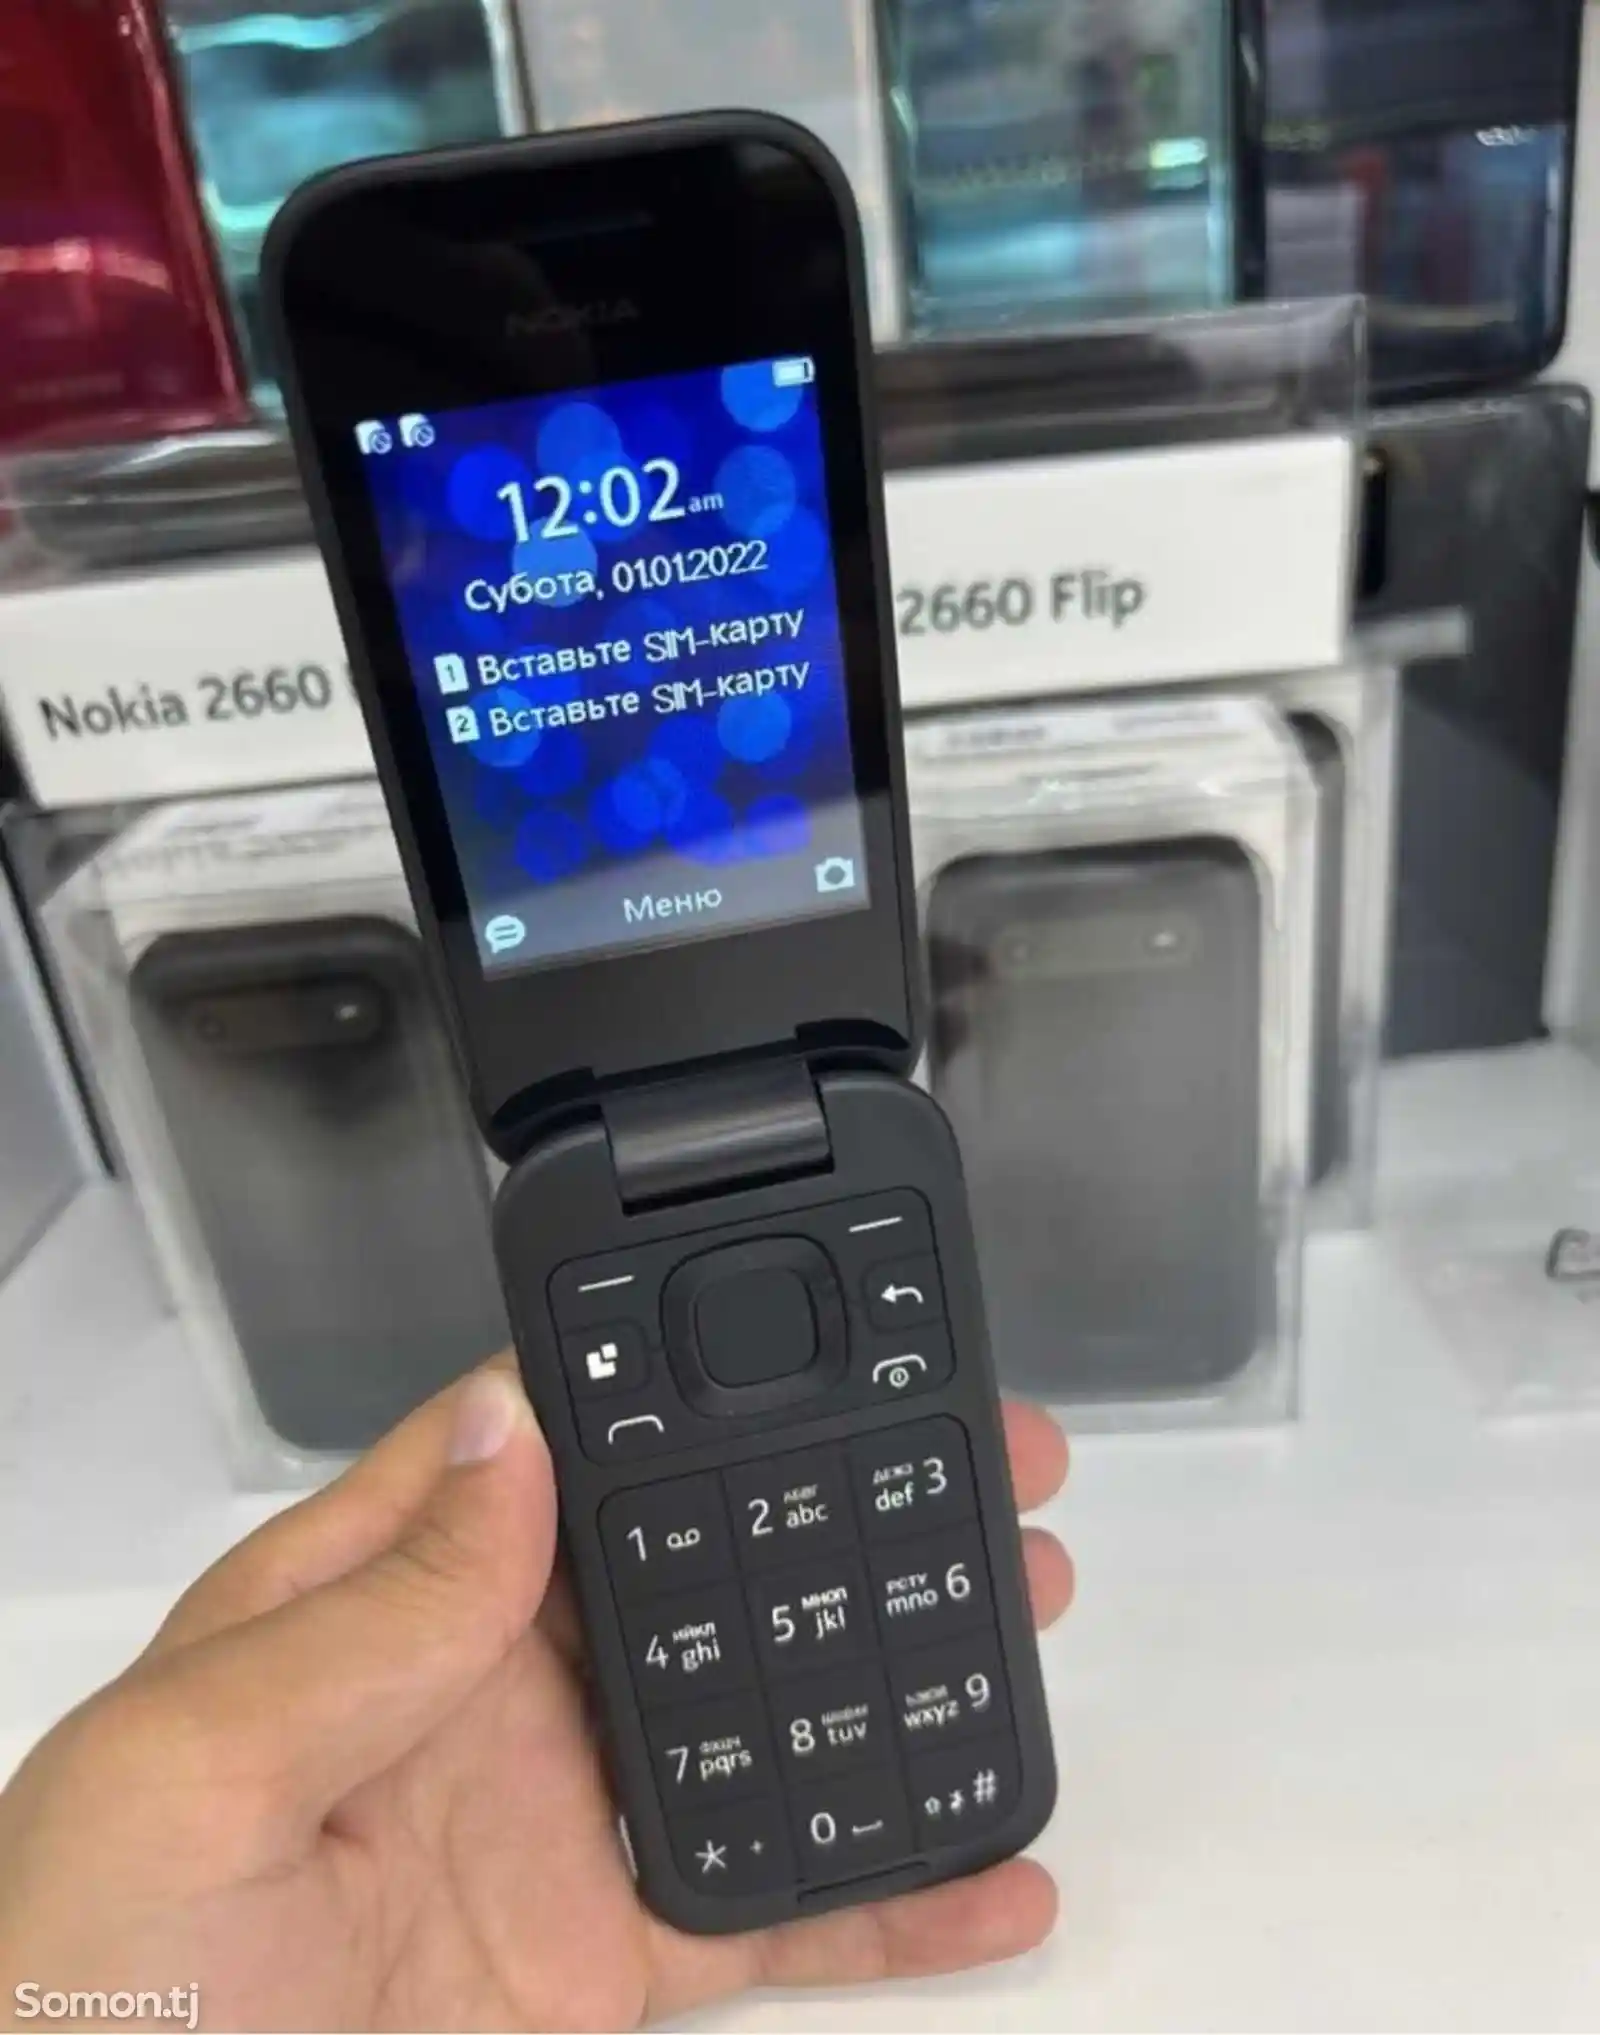 Nokia 2660 flip dual sim-1